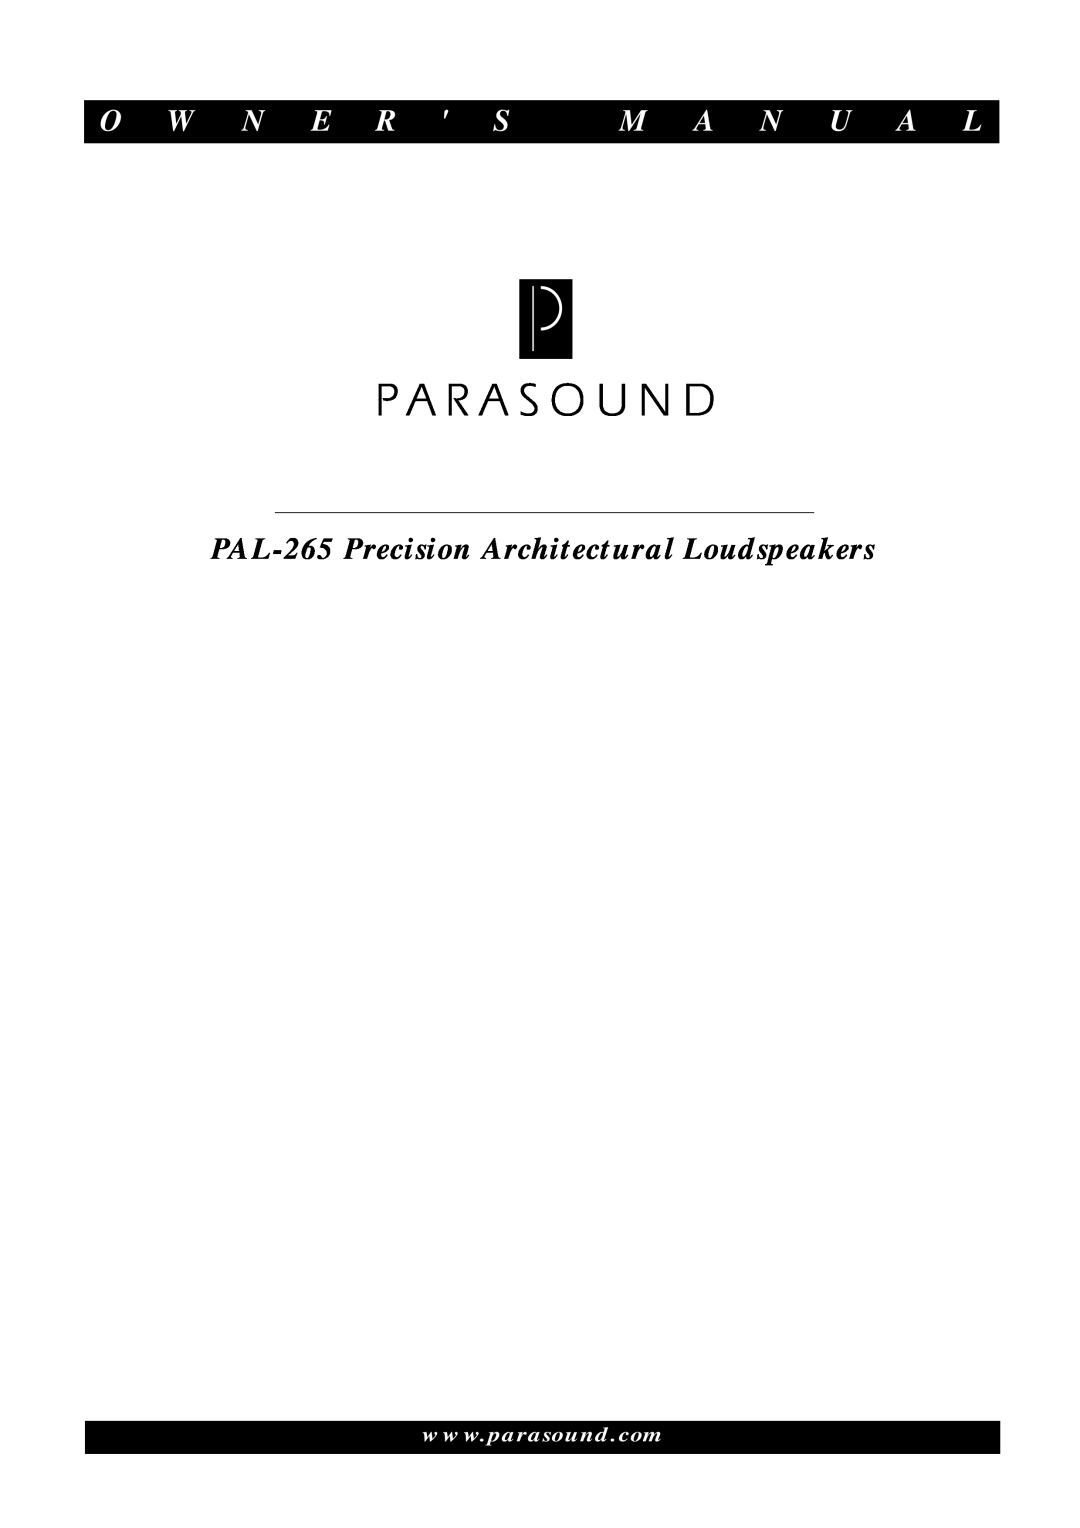 Parasound owner manual PAL-265Precision Architectural Loudspeakers, O W N E R S, M A N U A L 